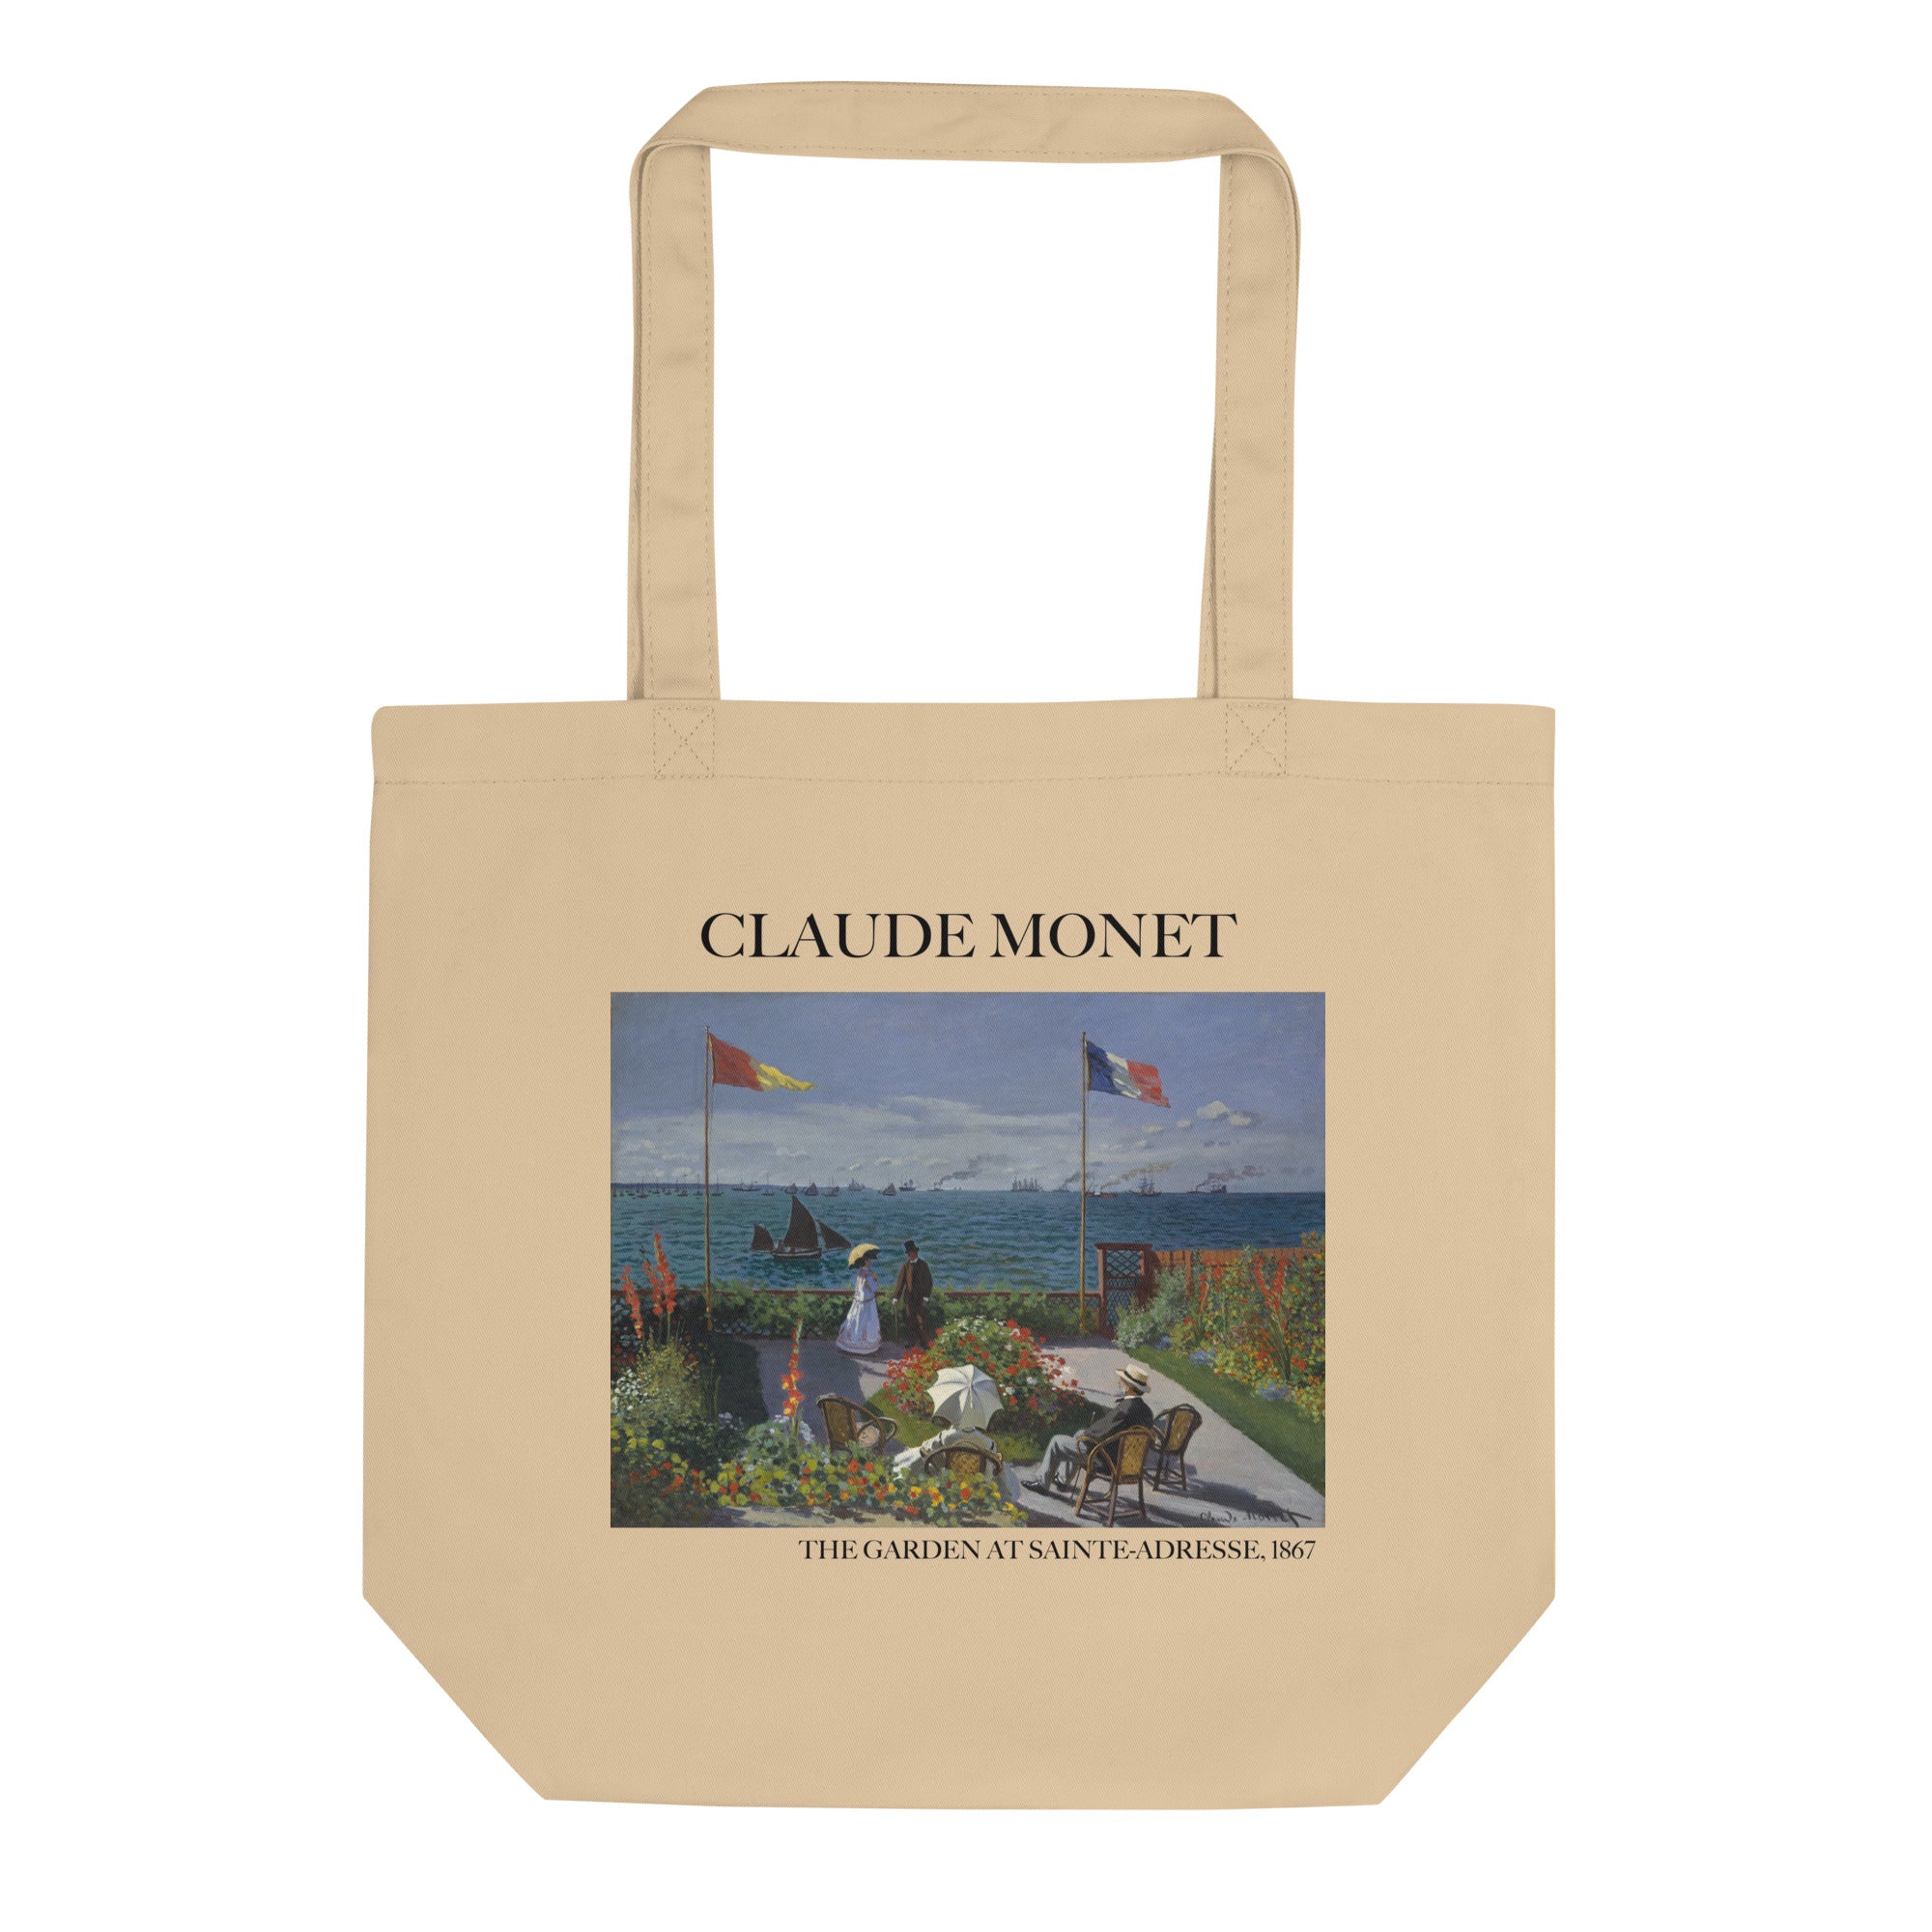 Claude Monet 'The Garden at Sainte-Adresse' Famous Painting Totebag | Eco Friendly Art Tote Bag